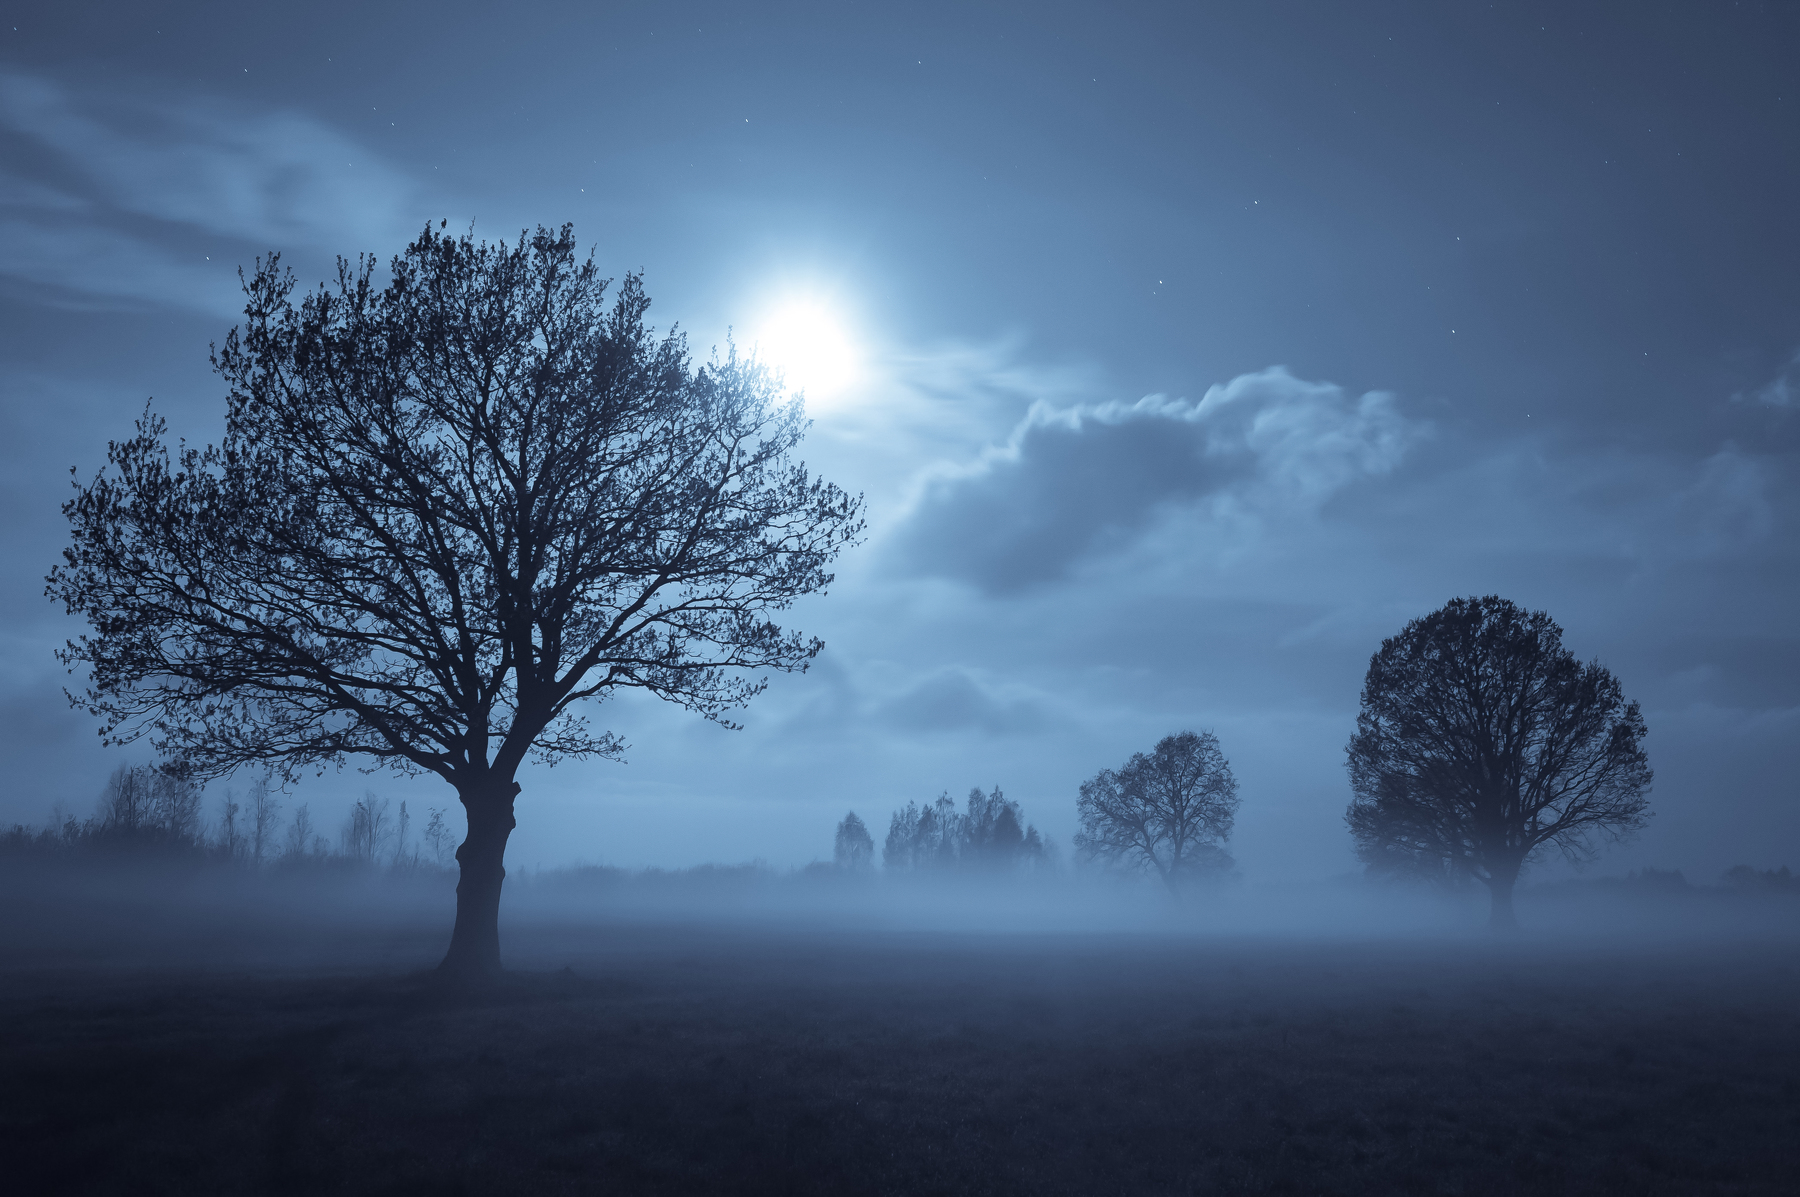 General 1800x1197 Aleksandr Hvozd landscape night trees desolate Moon bright sky horizon mist stars